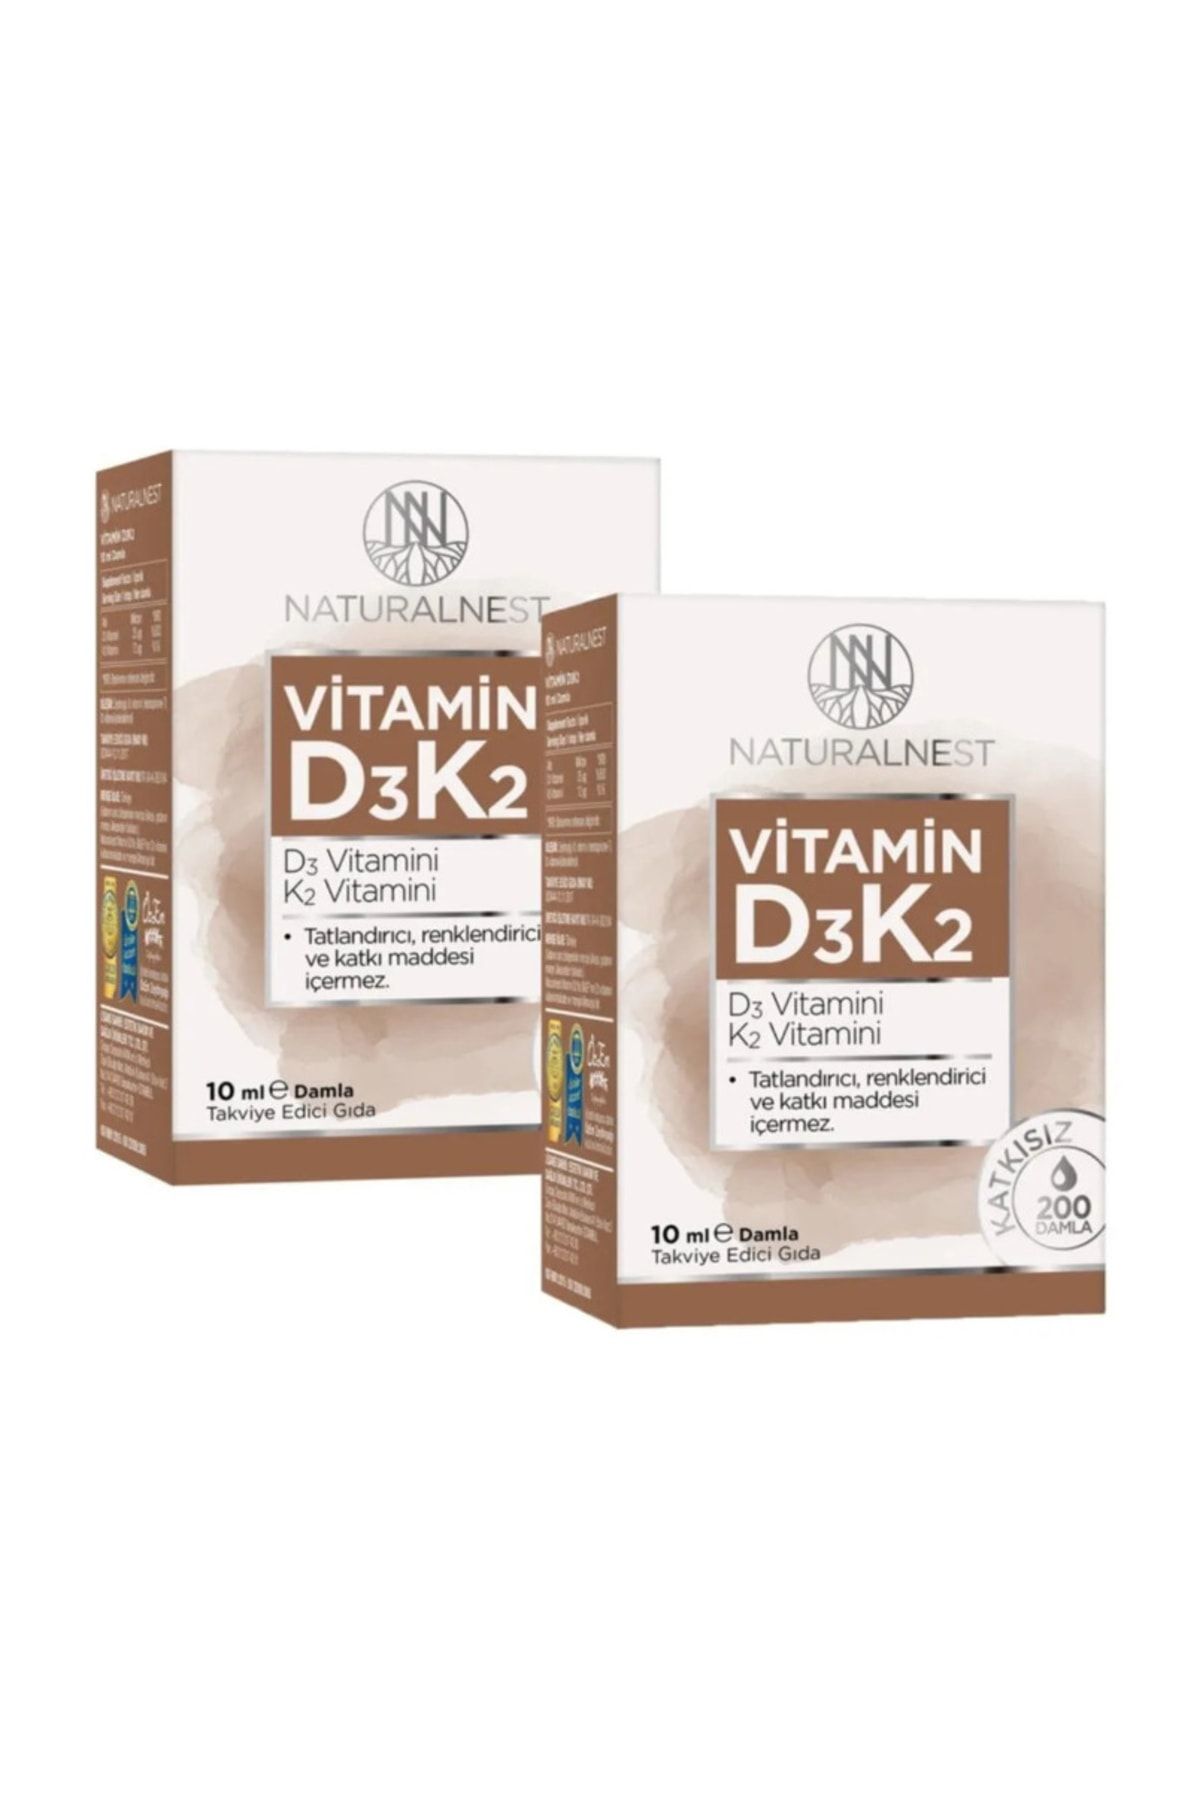 Natural Nest Vitamin D3 K2 Damla Takviye Edici Gıda 2 Kutu 10 ml